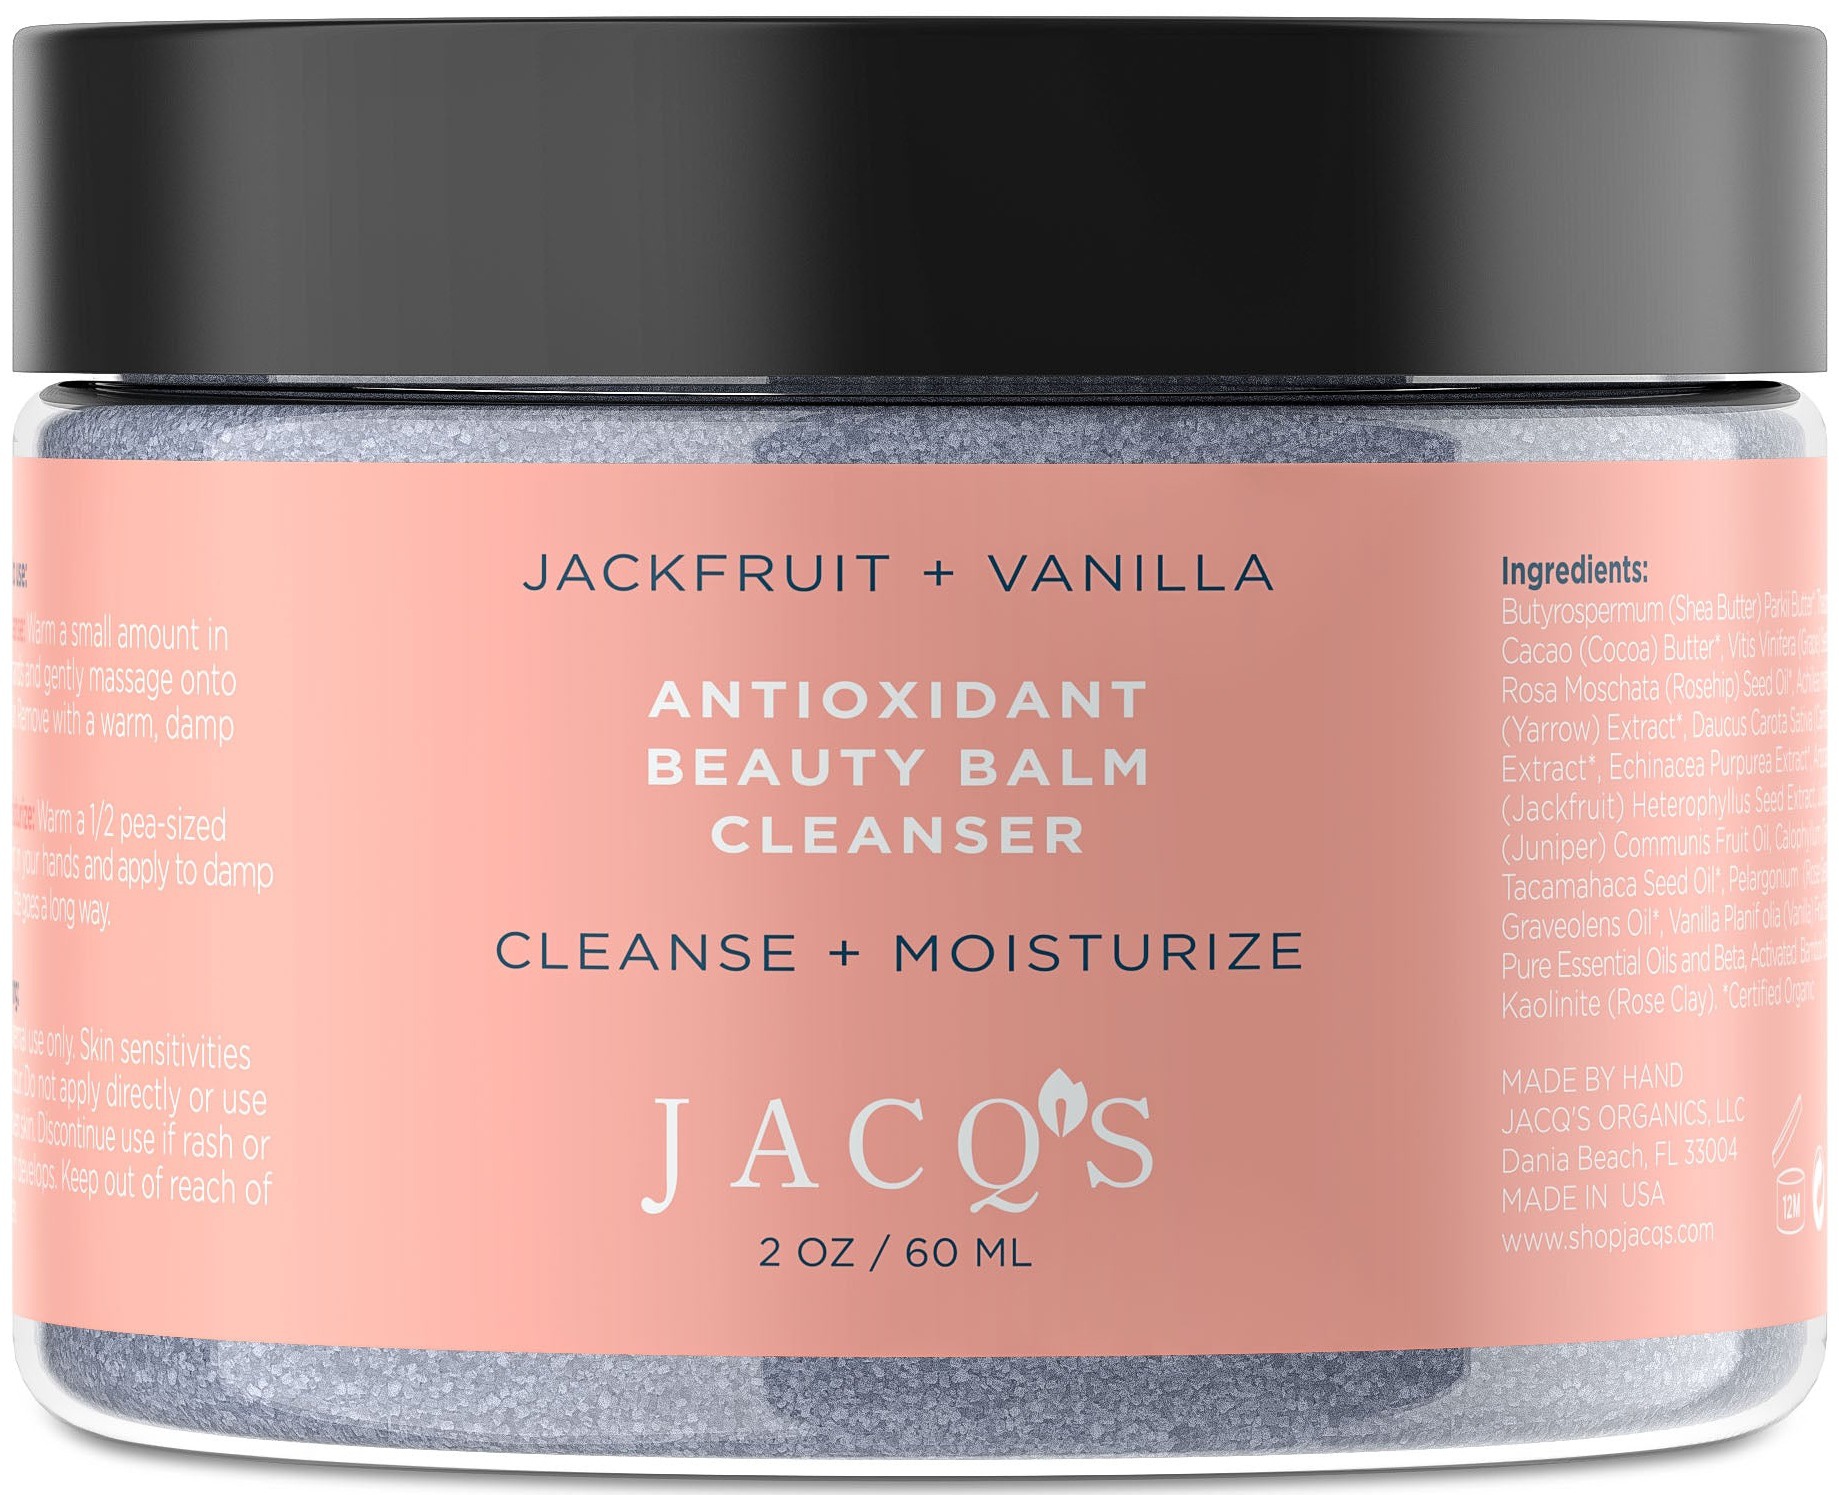 JACQ’S Cleansing & Moisturizing Antioxidant Beauty Balm